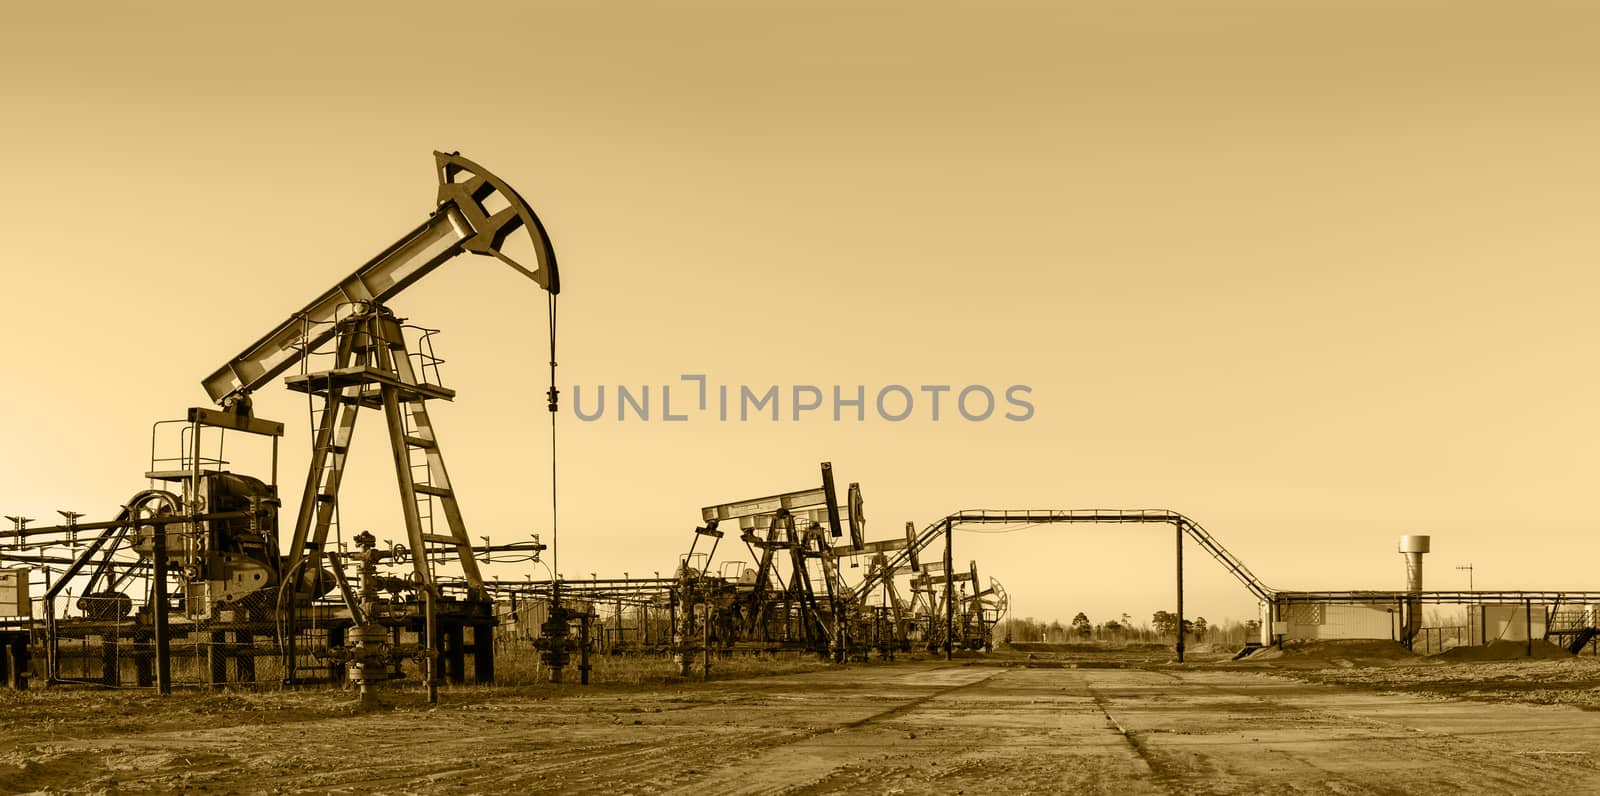 Oil pumps on a oil field. by bashta